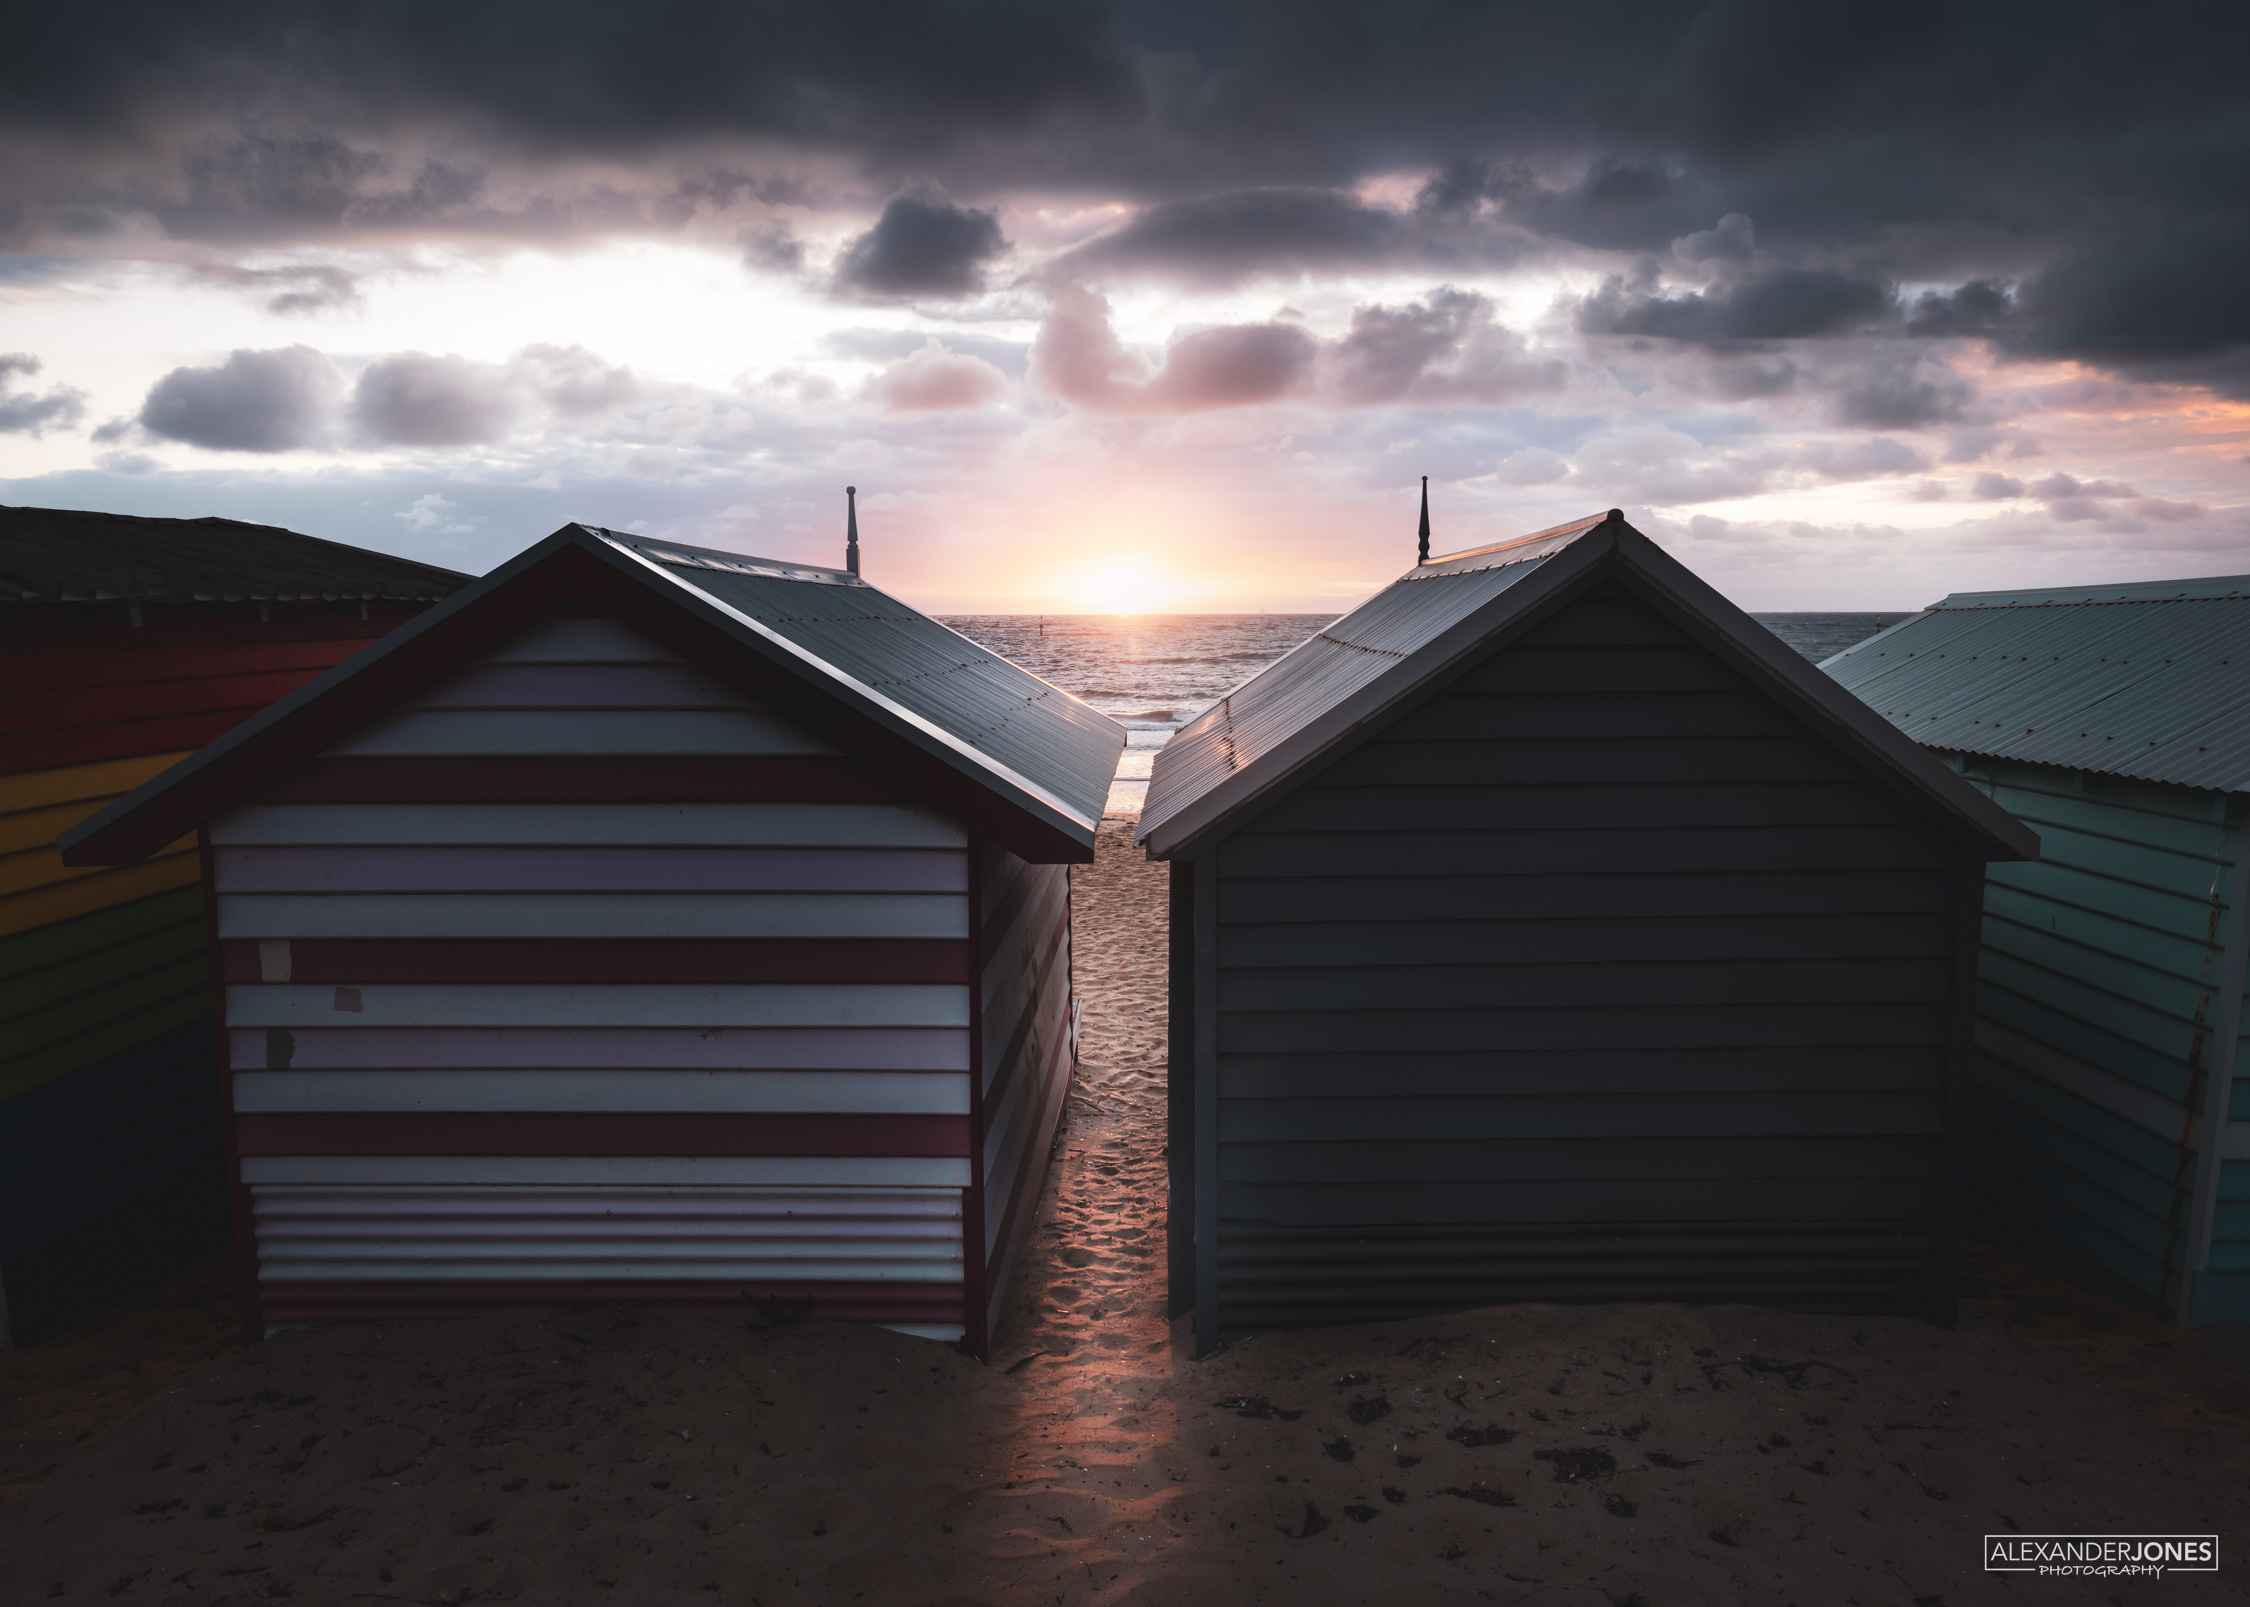 Sun setting over the horizon behind the world famous brighton bathing boxes at brighton beach in melbourne australia